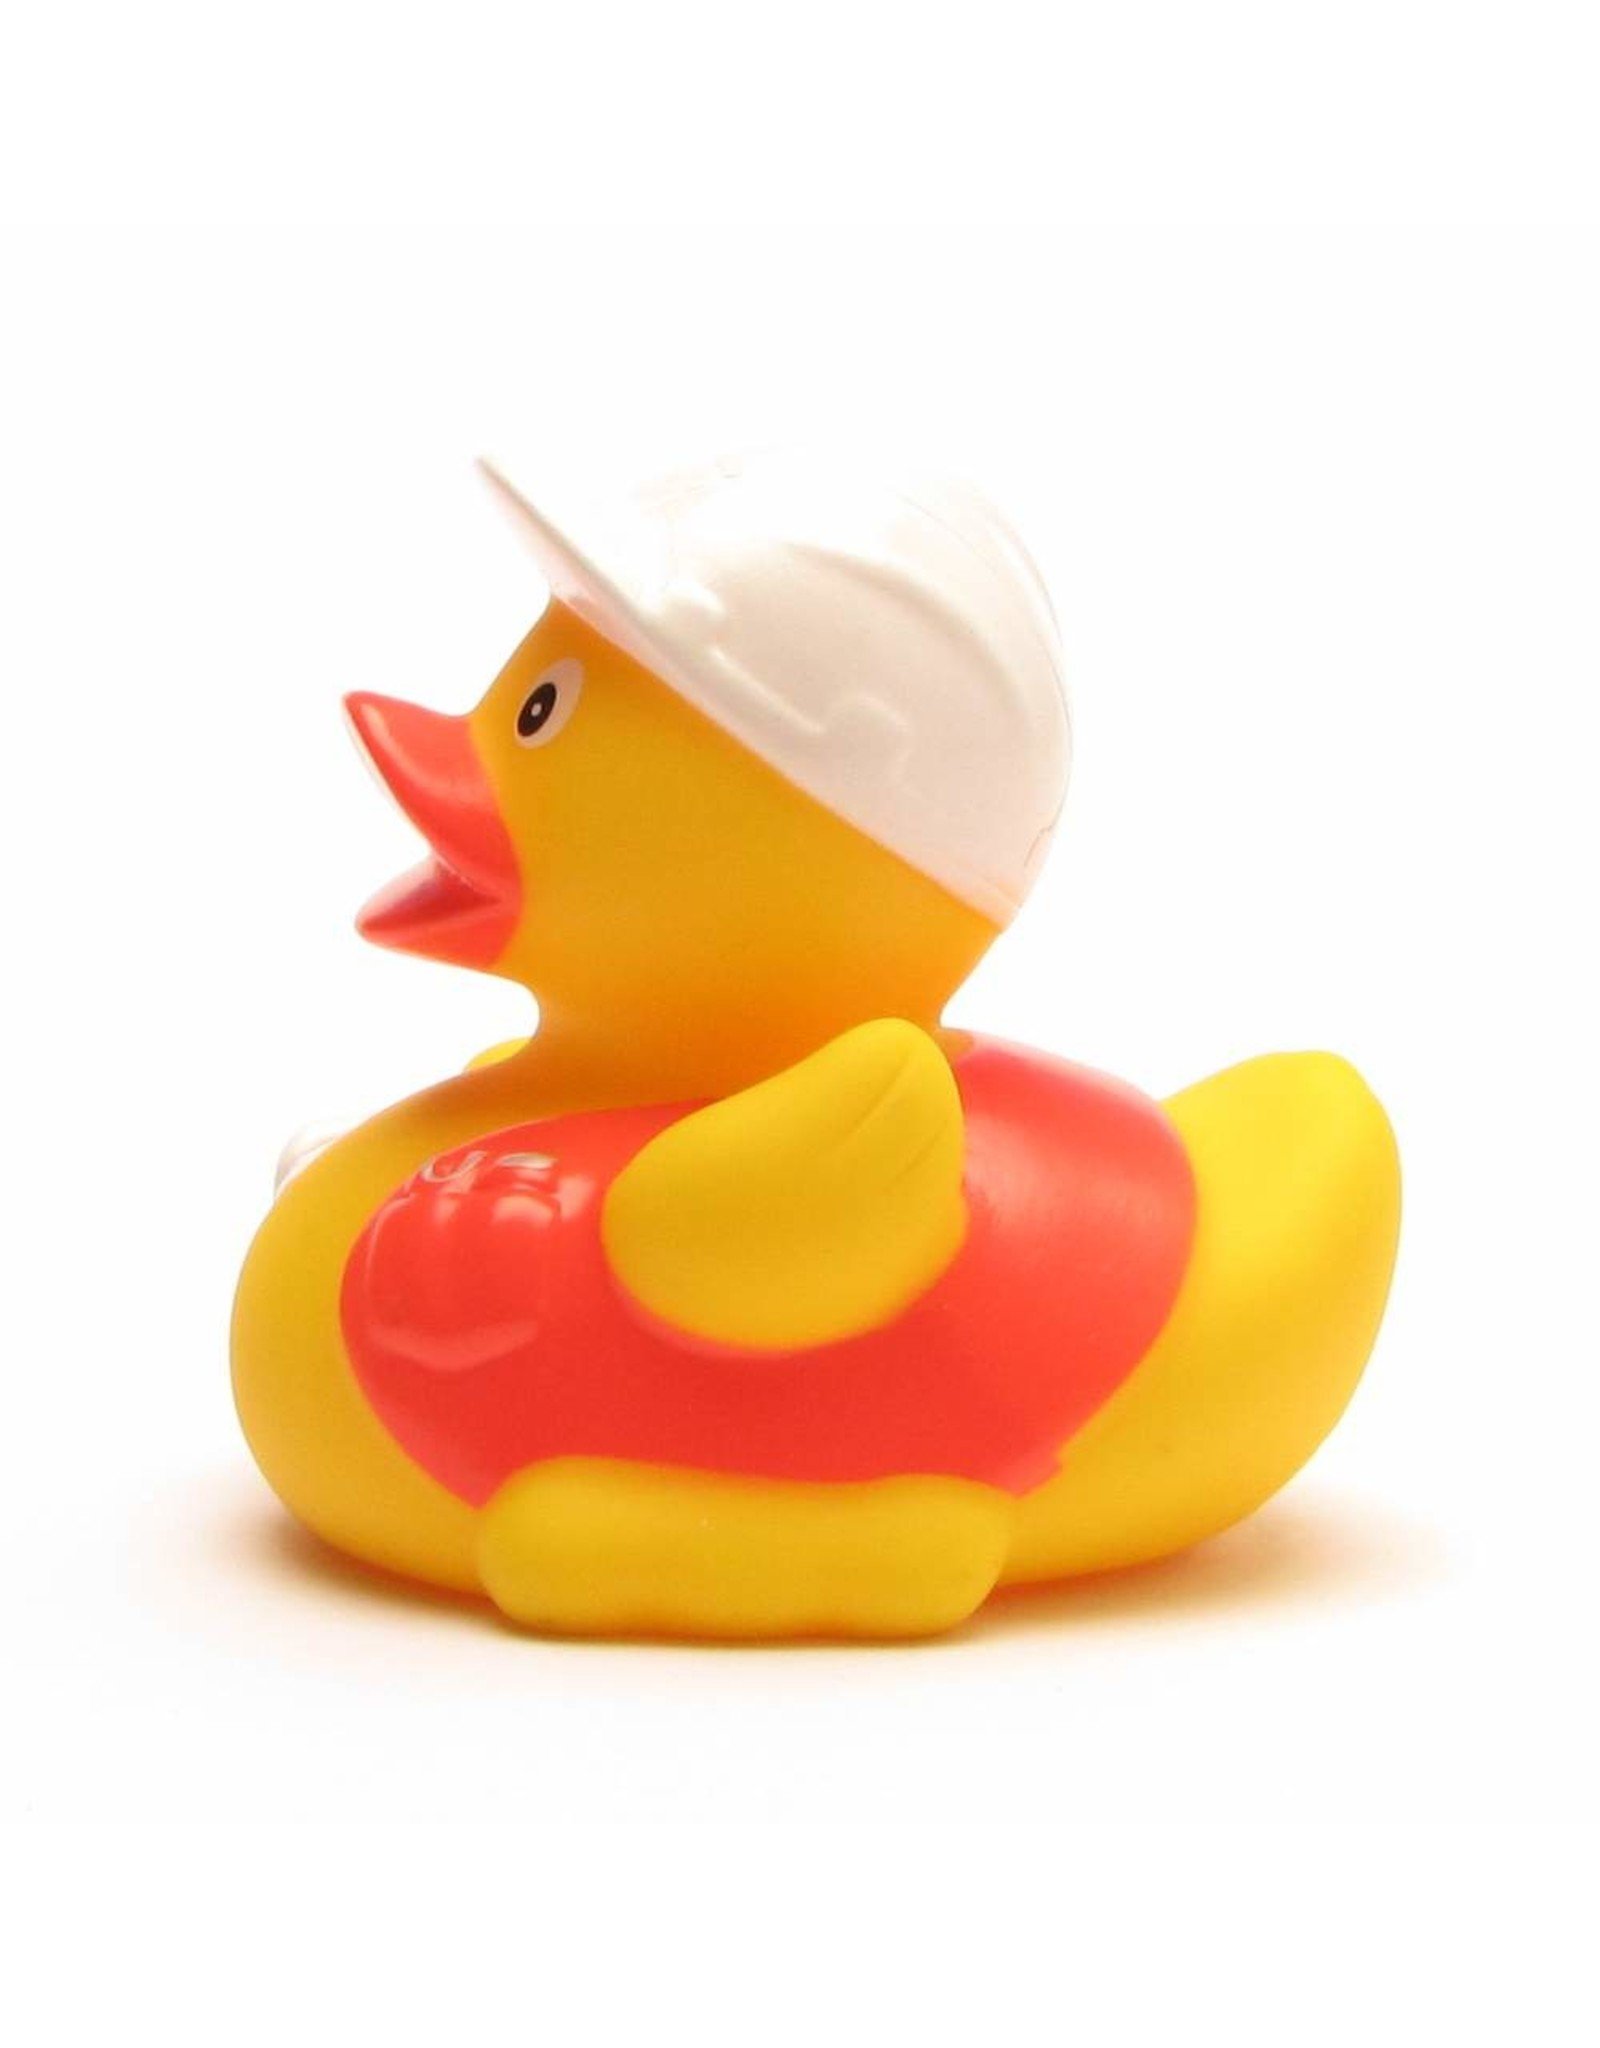 Construction Contractor Rubber Duck